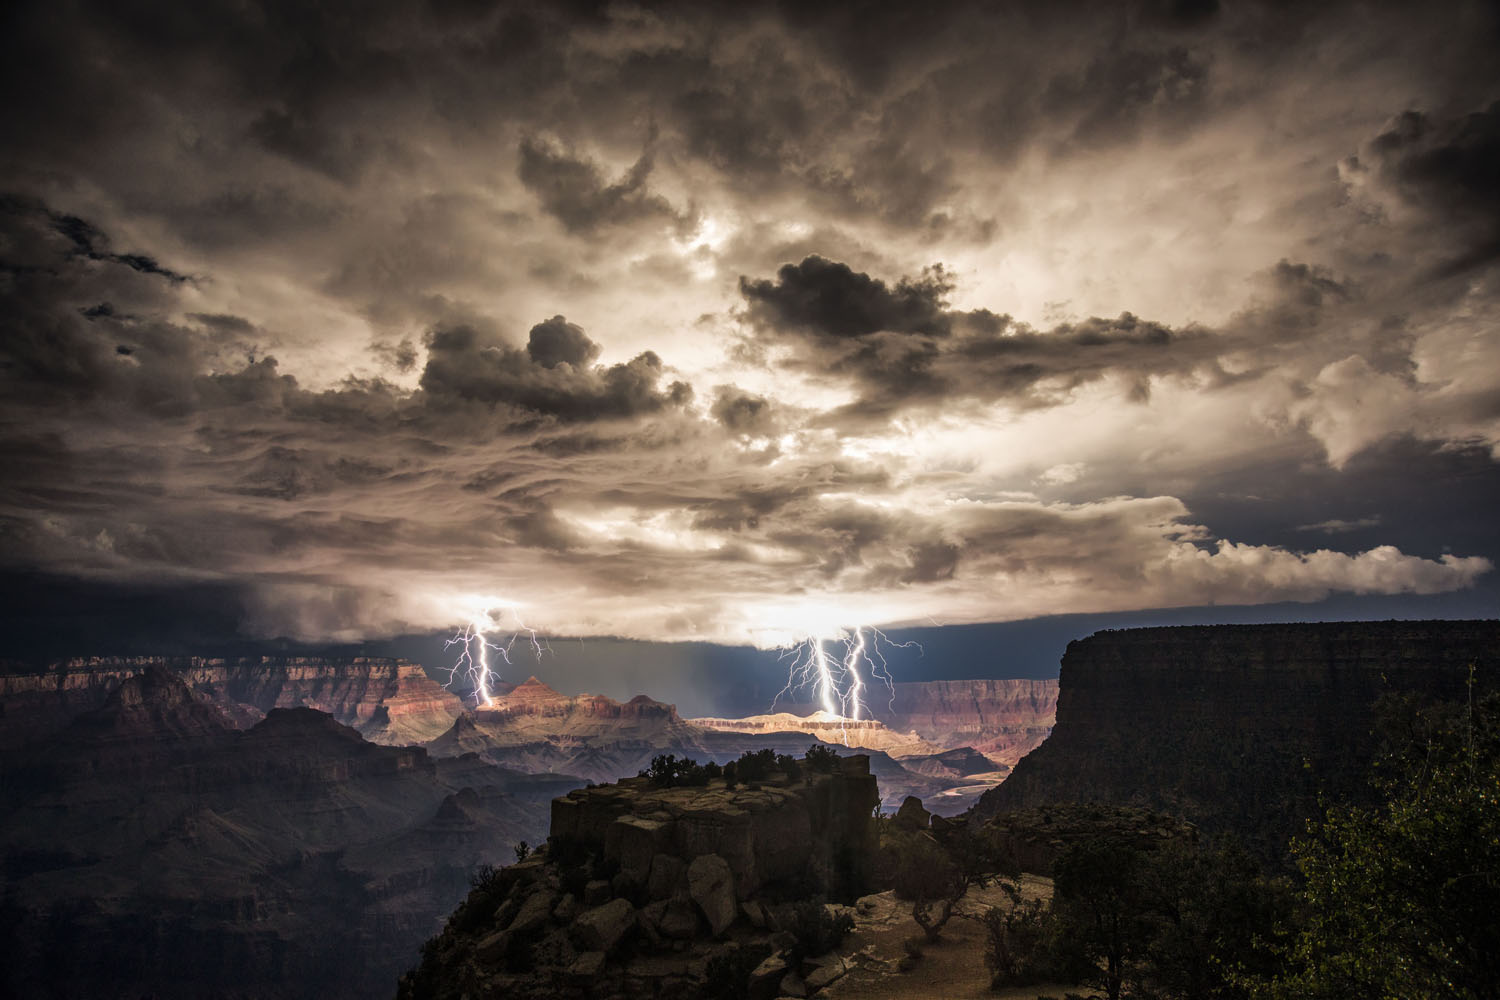 Lightning striking the Grand Canyon, Arizona, America - 30 Aug 2013